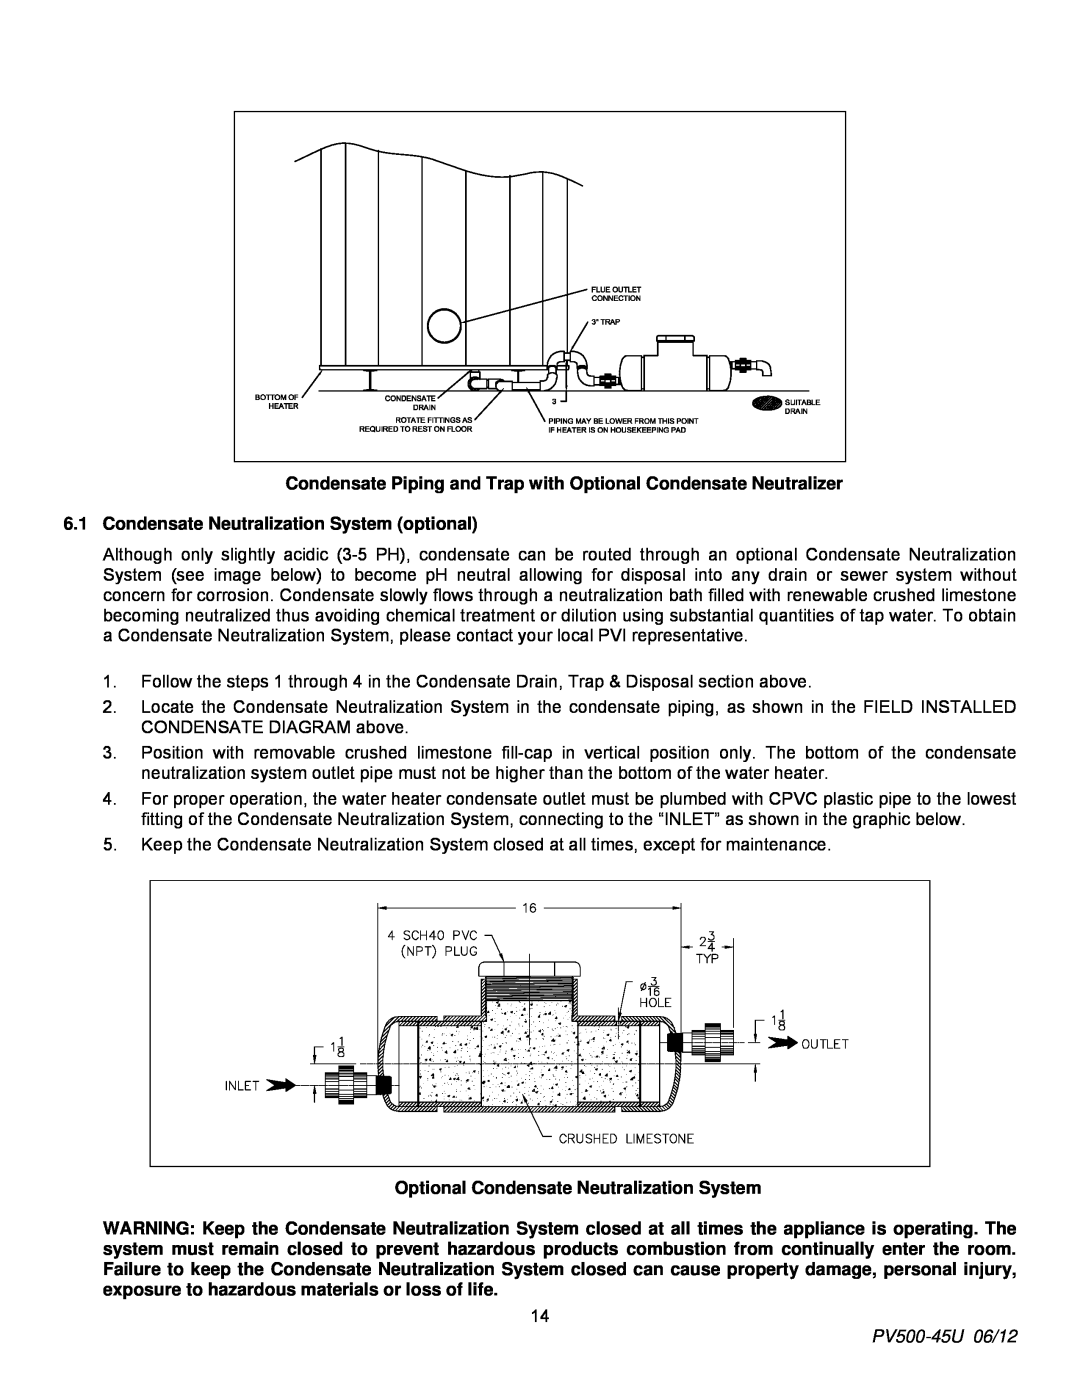 PVI Industries PV500-45U manual 6.1Condensate Neutralization System optional, Optional Condensate Neutralization System 